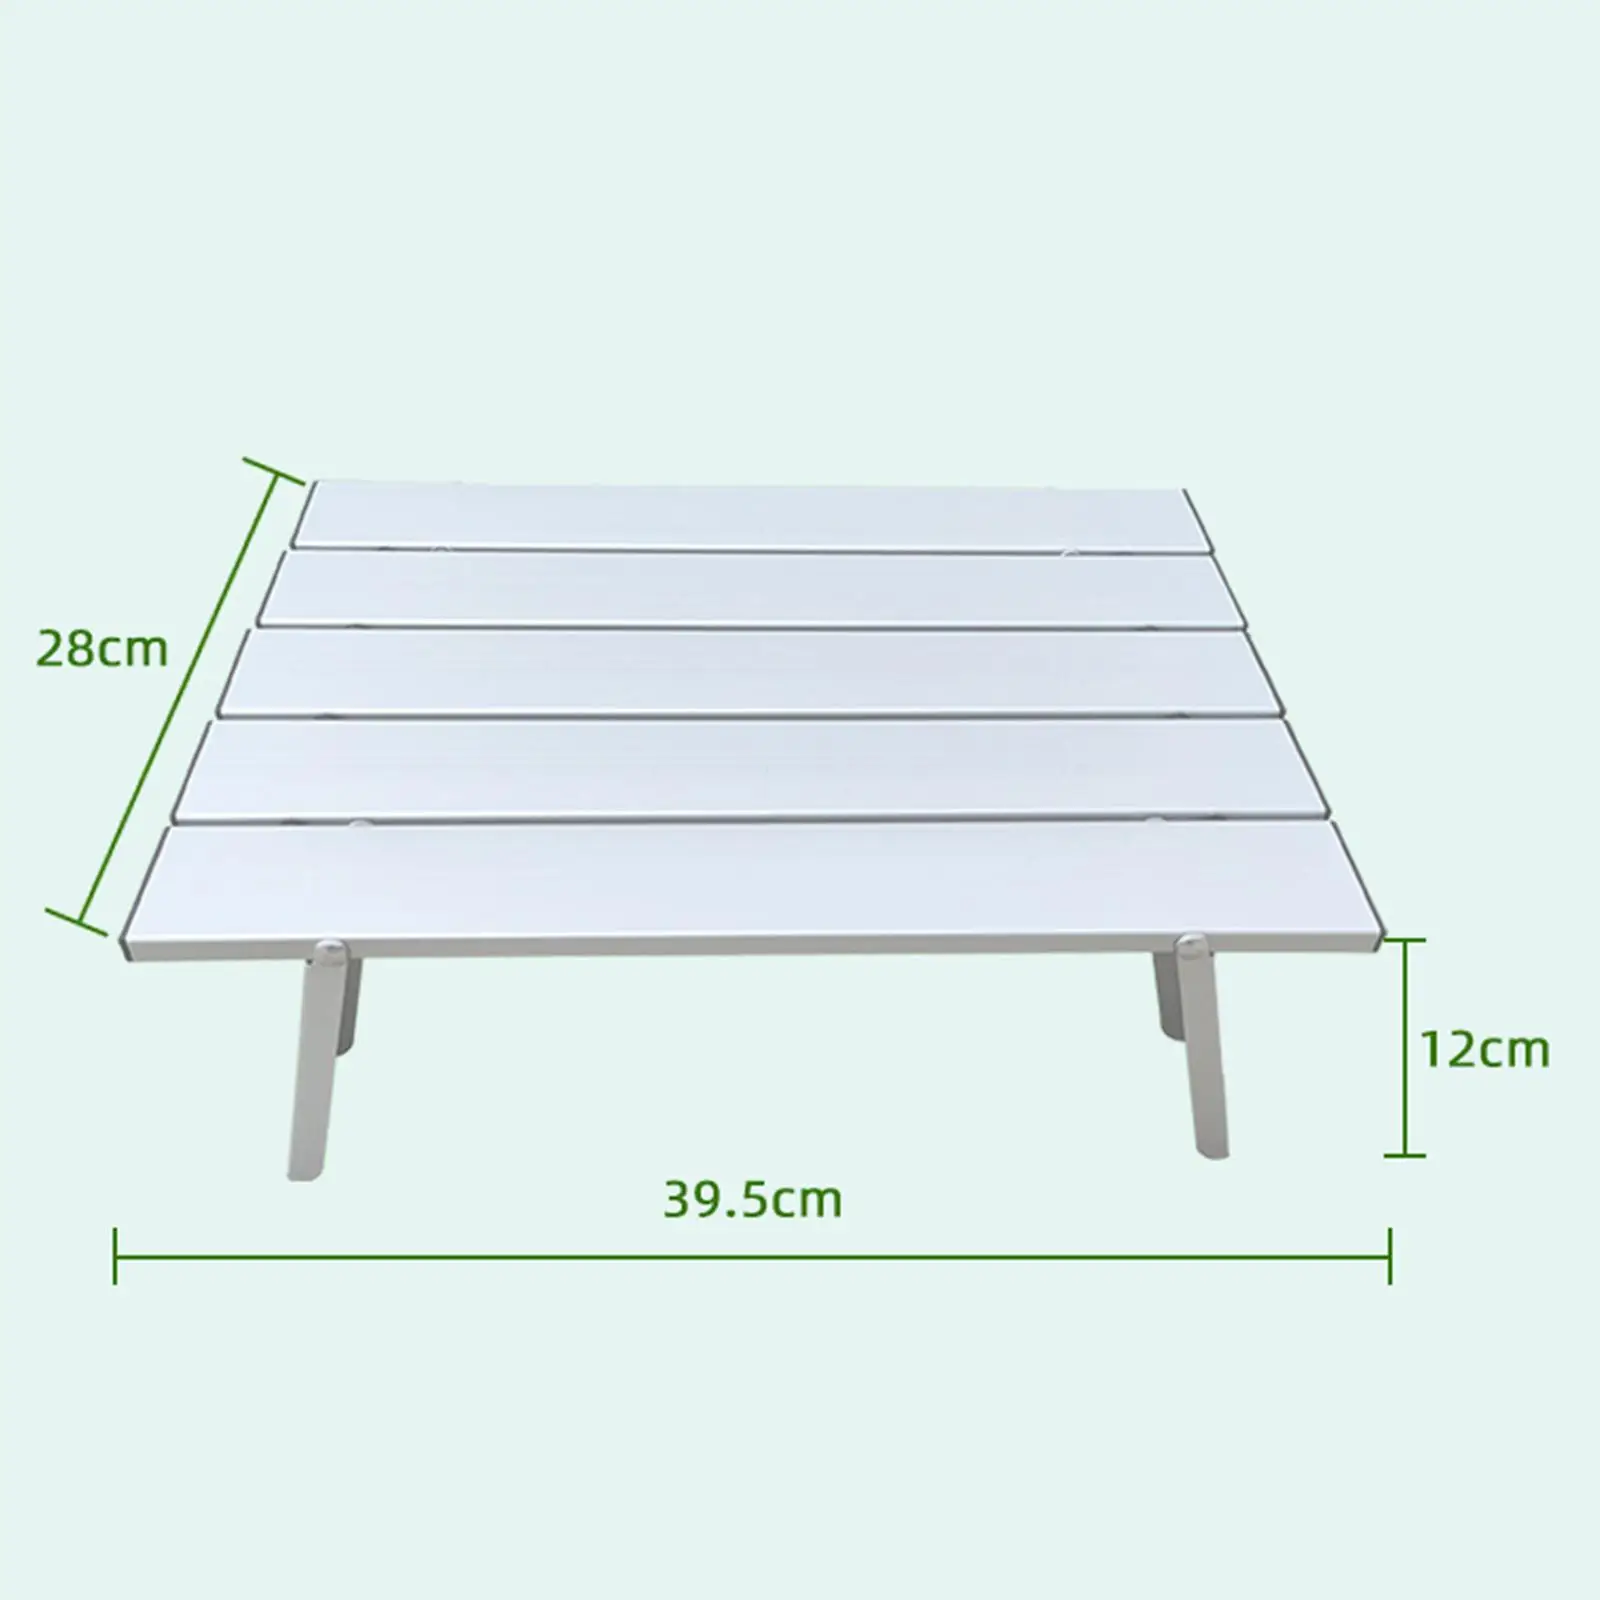 Foldable Camping Table Furniture Aluminium Alloy for Fishing Backyard BBQ